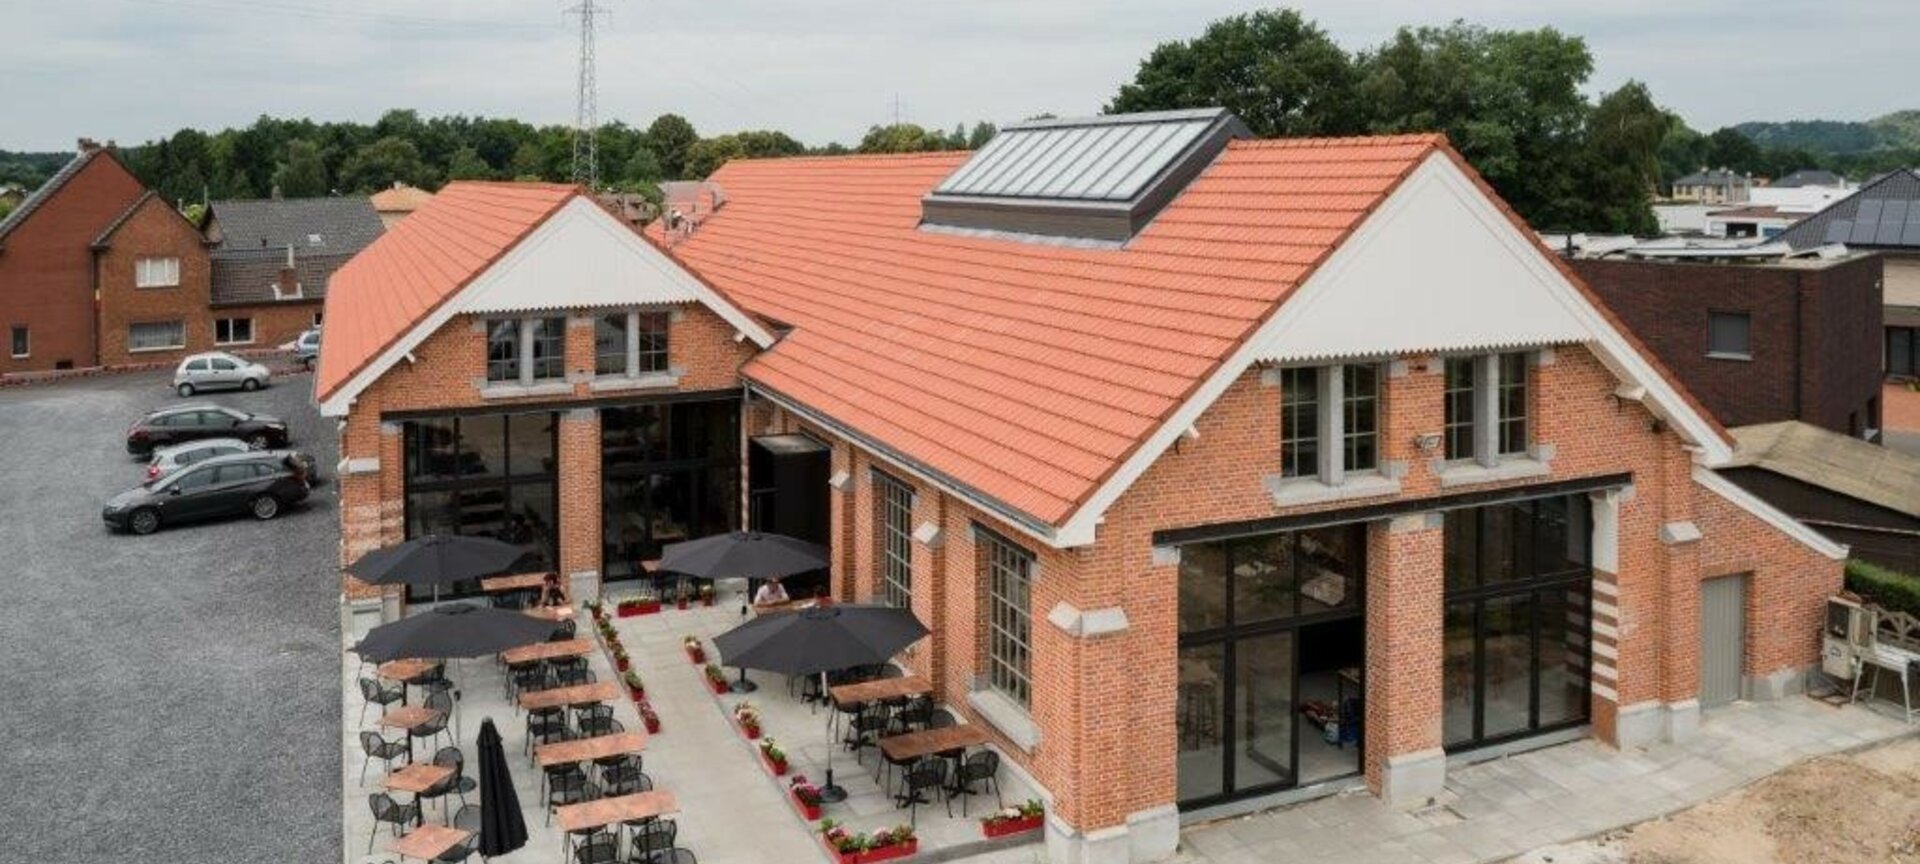 Brouwerij & Grand Café "Remise 56" - drone-view